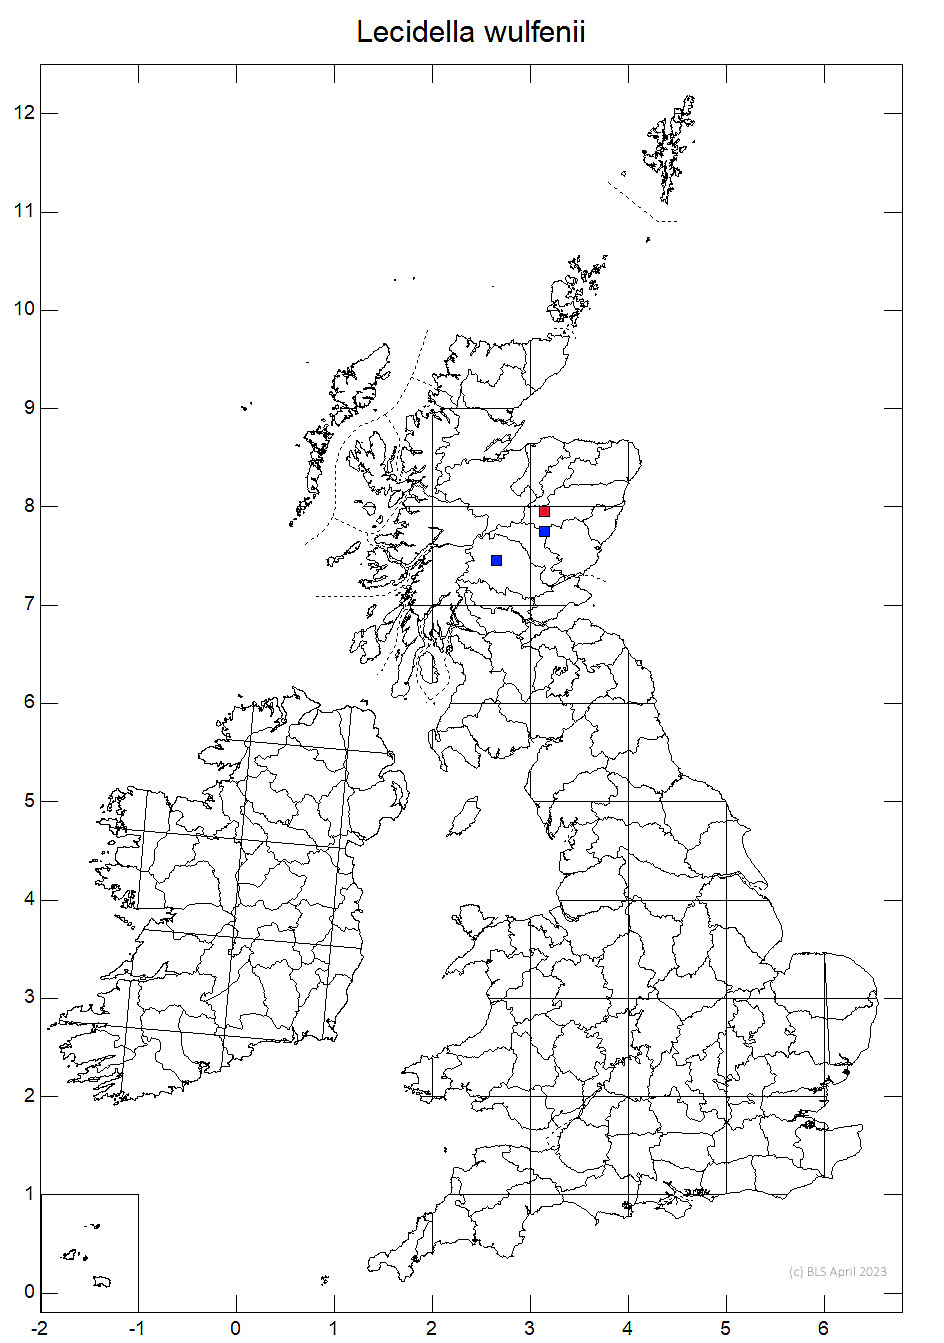 Lecidella wulfenii 10km sq distribution map